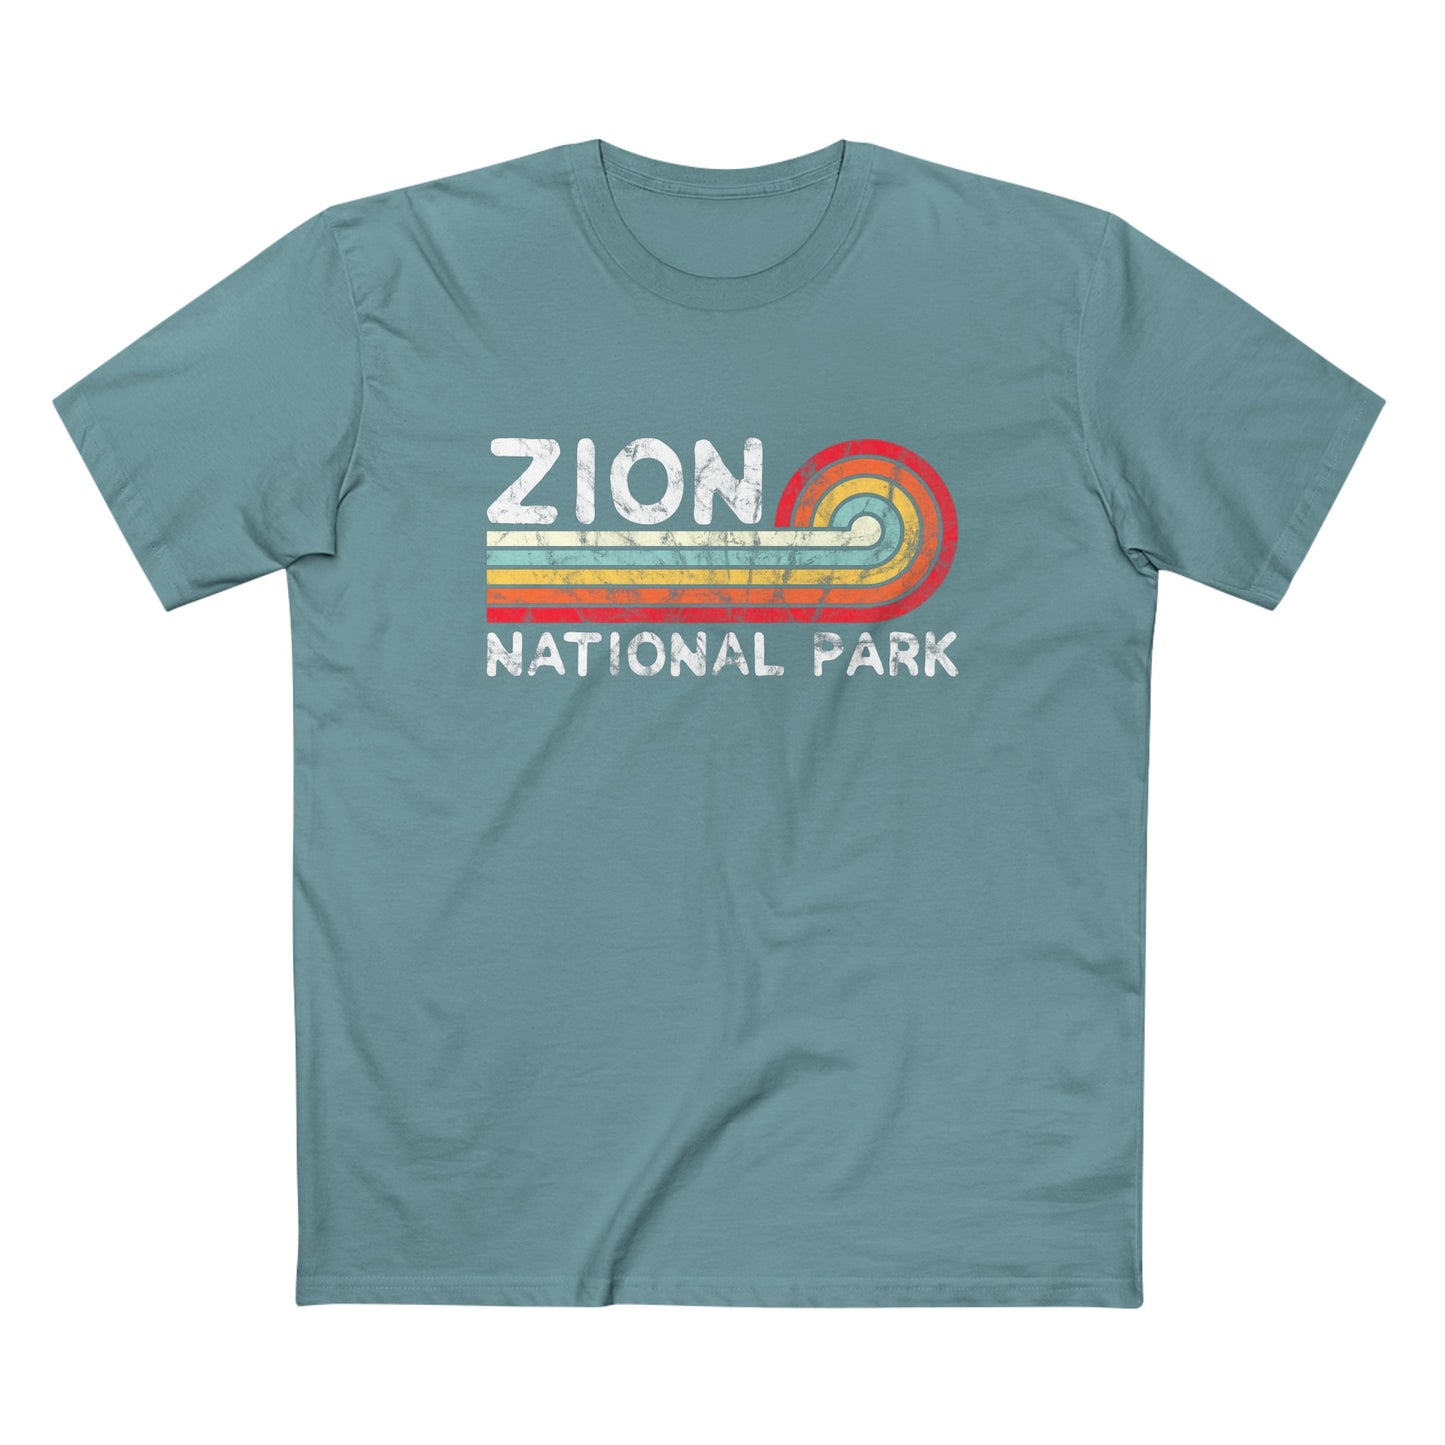 Zion National Park T-Shirt - Vintage Stretched Sunrise